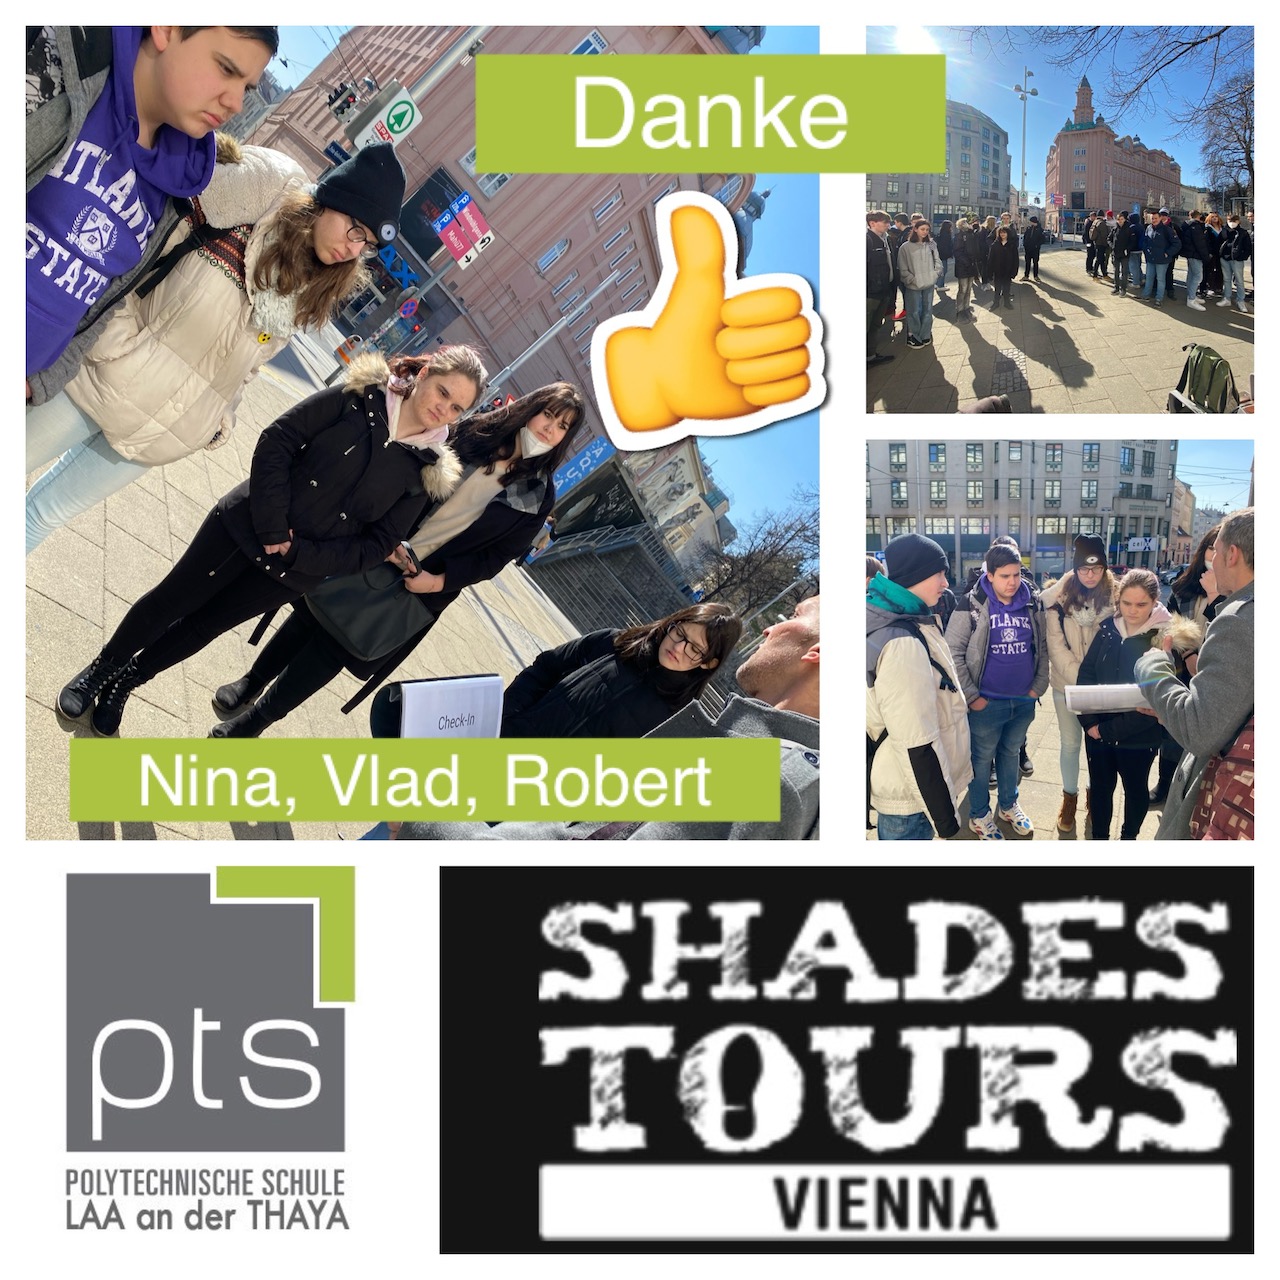 shades tour Wien